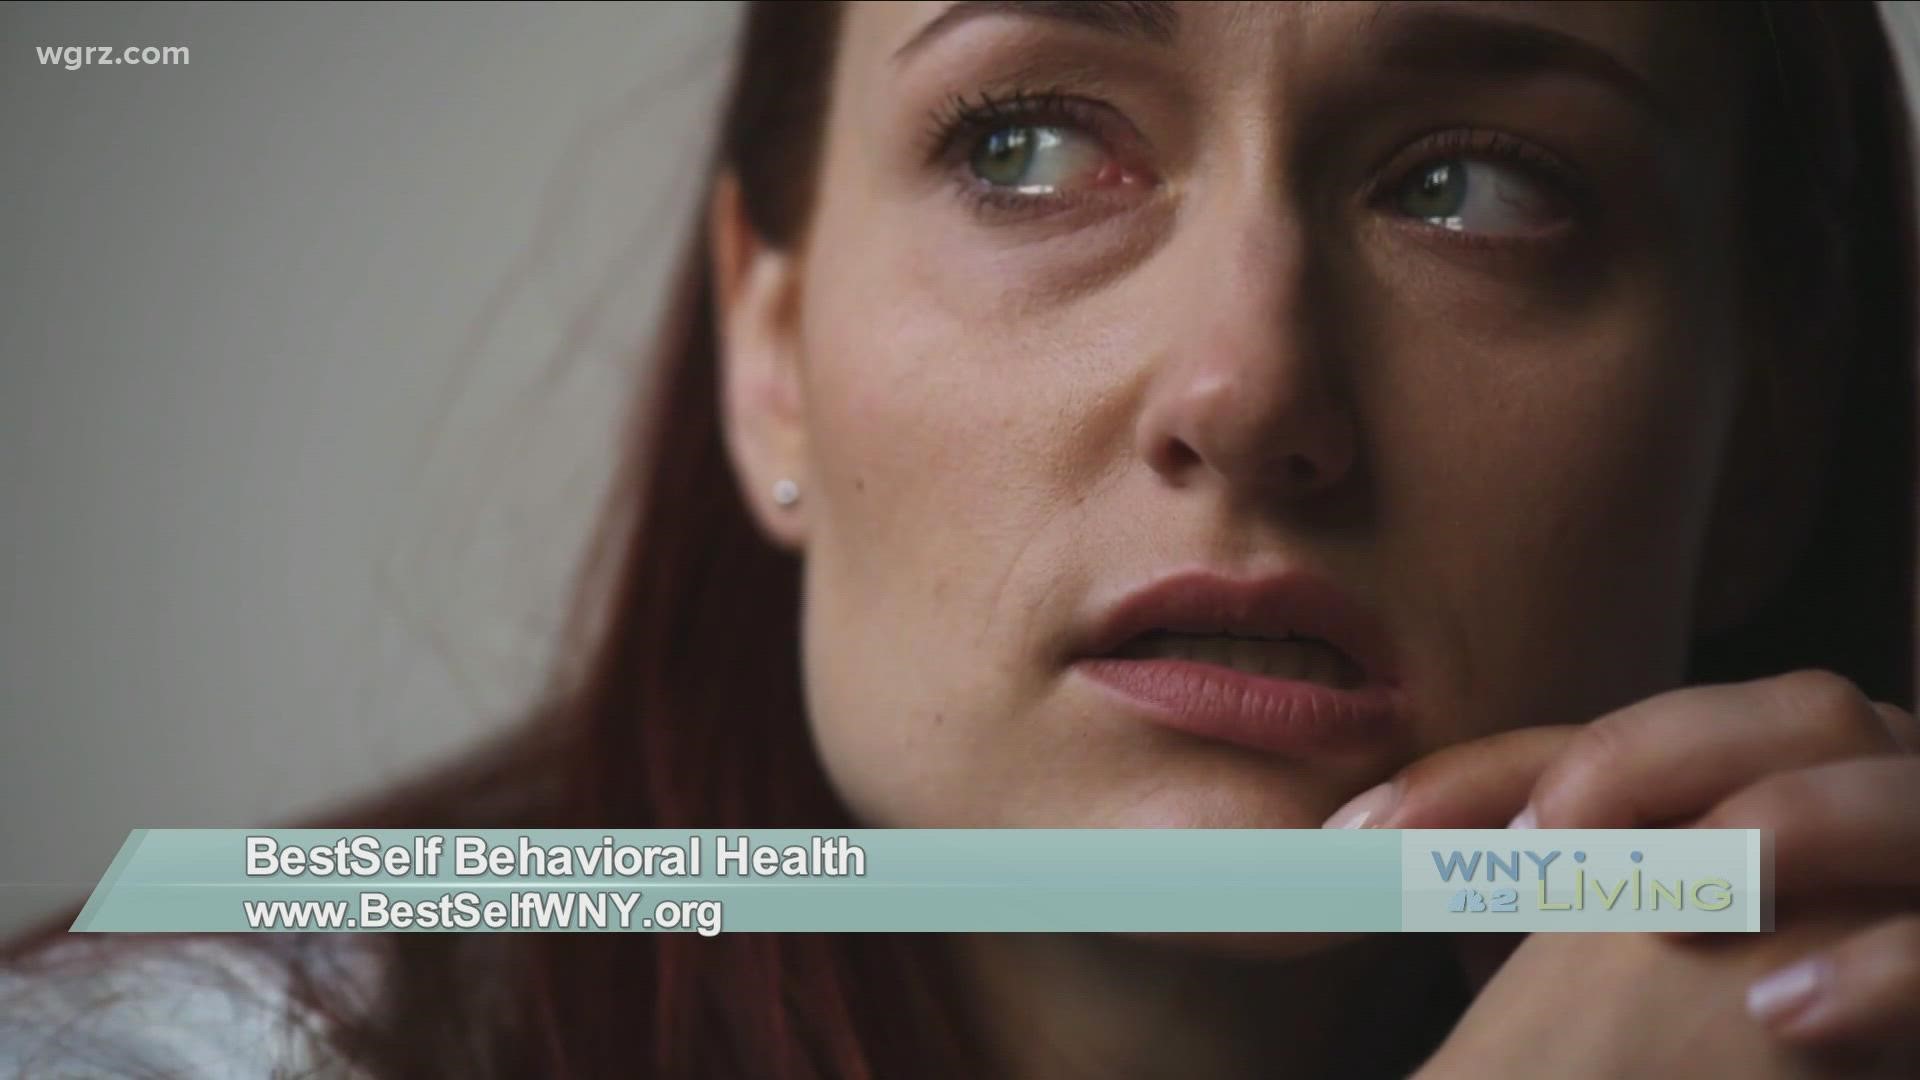 WNY Living - January 22 - BestSelf Behavioral Health (THIS VIDEO IS SPONSORED BY BESTSELF BEHAVIORAL HEALTH)